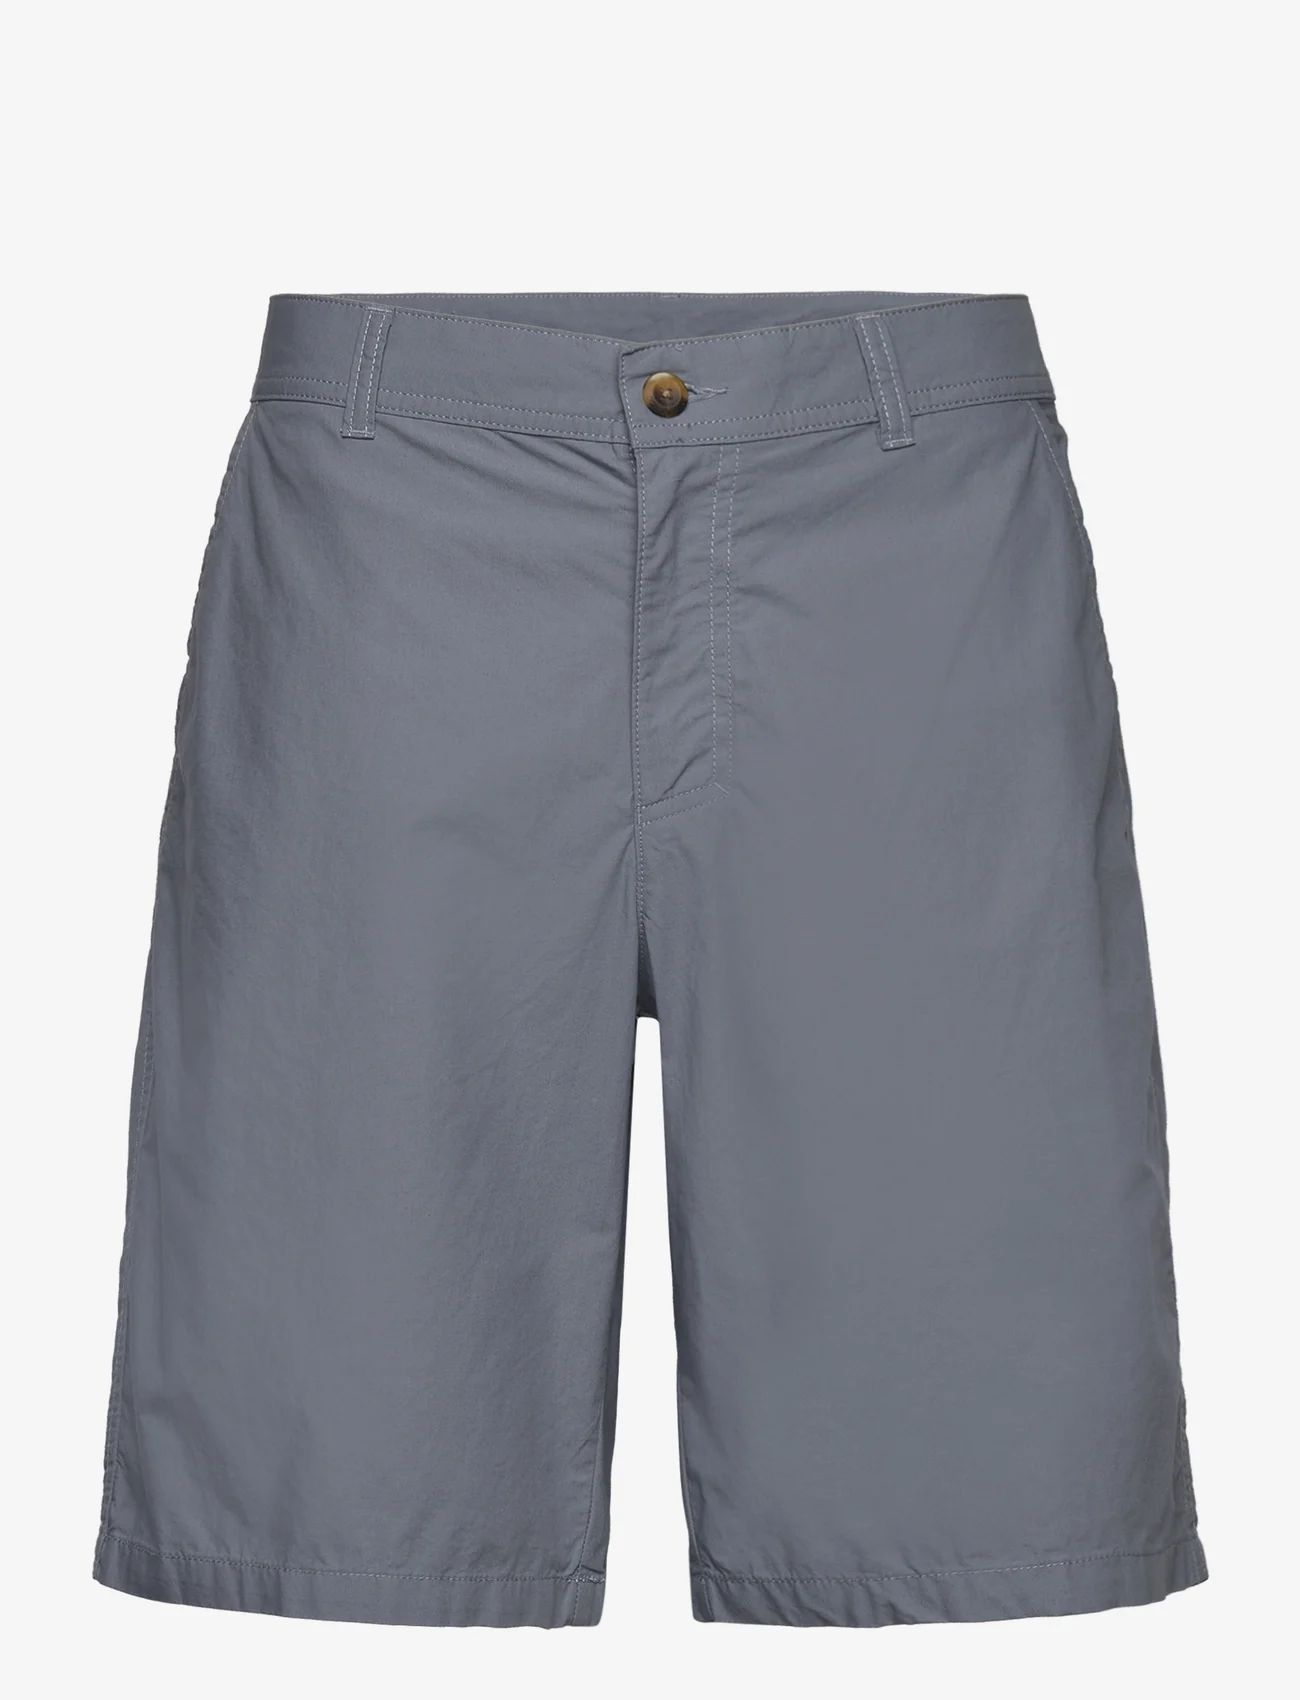 Columbia Sportswear - Washed Out Short - laagste prijzen - grey ash - 0